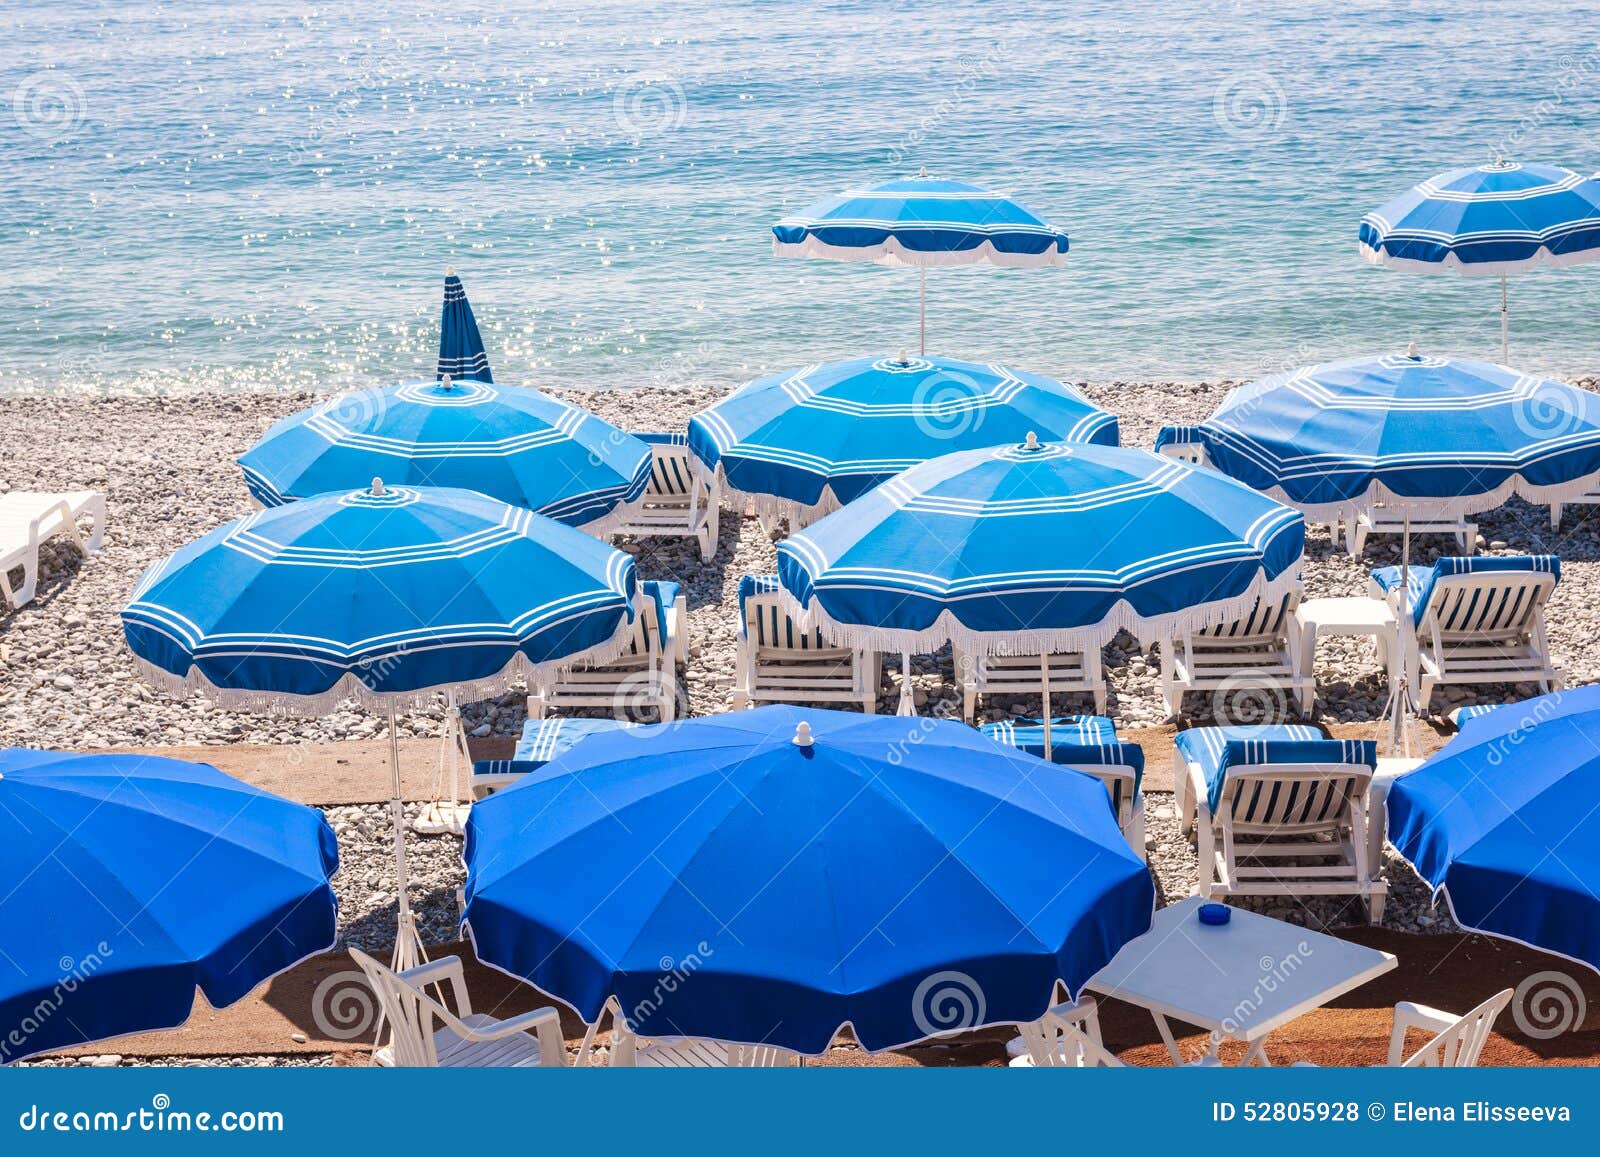 Blue Beach Umbrellas in Nice Stock Photo - Image of nice, beaches: 52805928